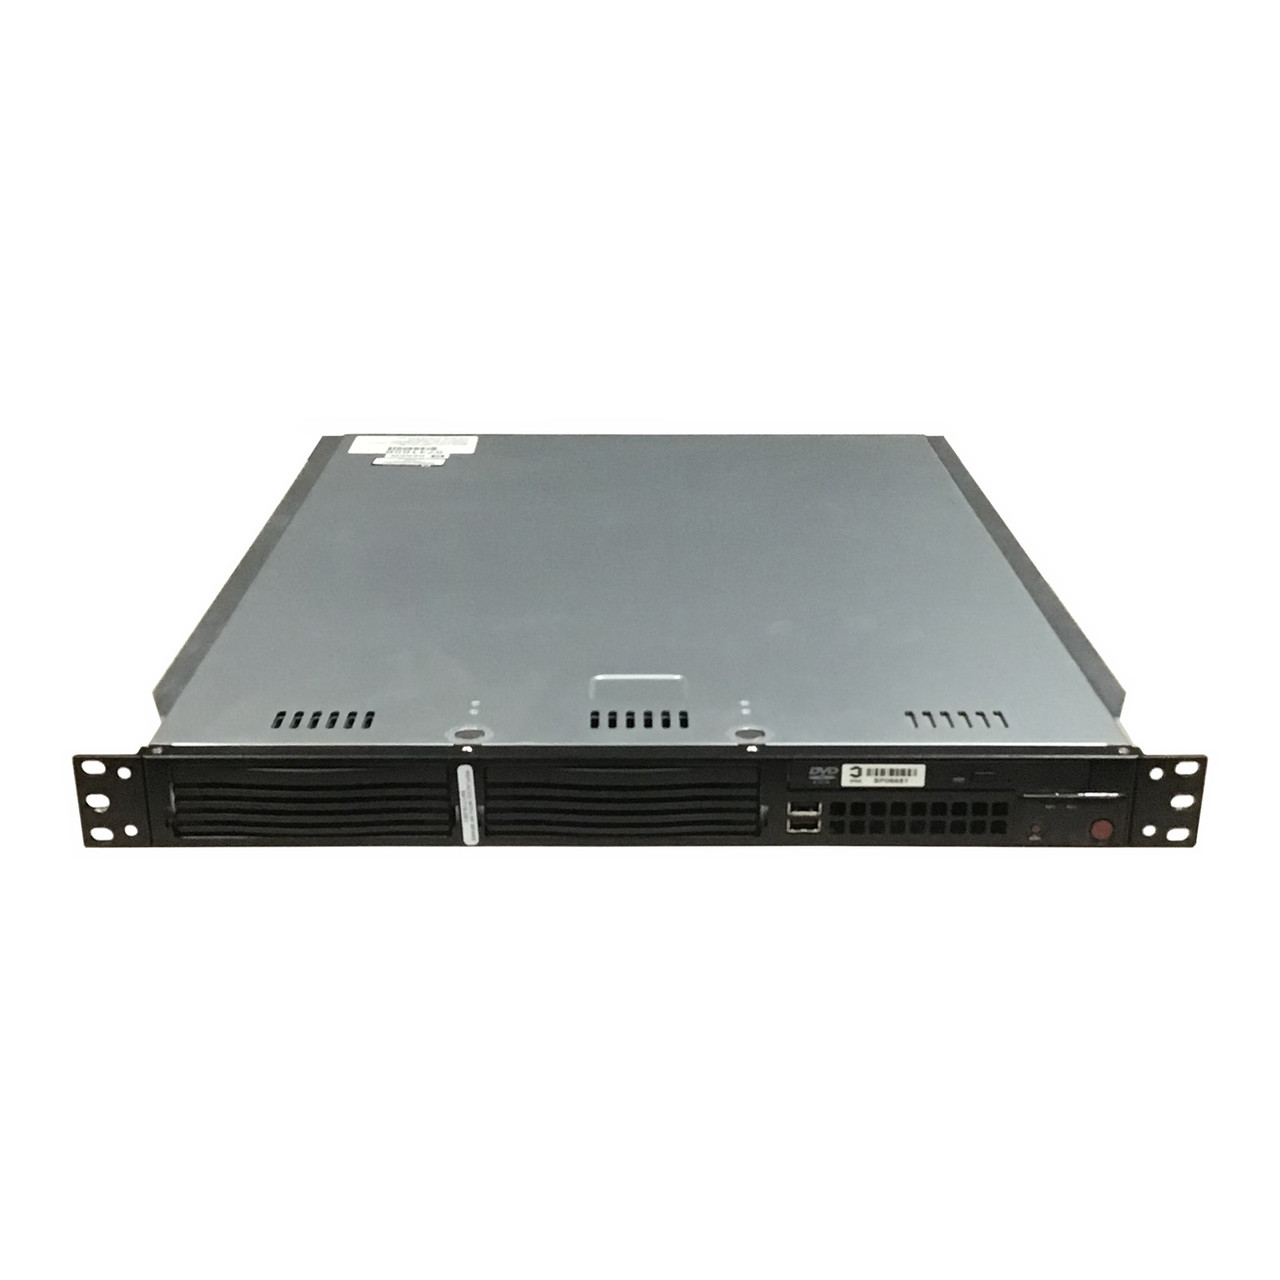 HPe 641719-001 3Par Inserver Storage Service processor 1U Micro Server